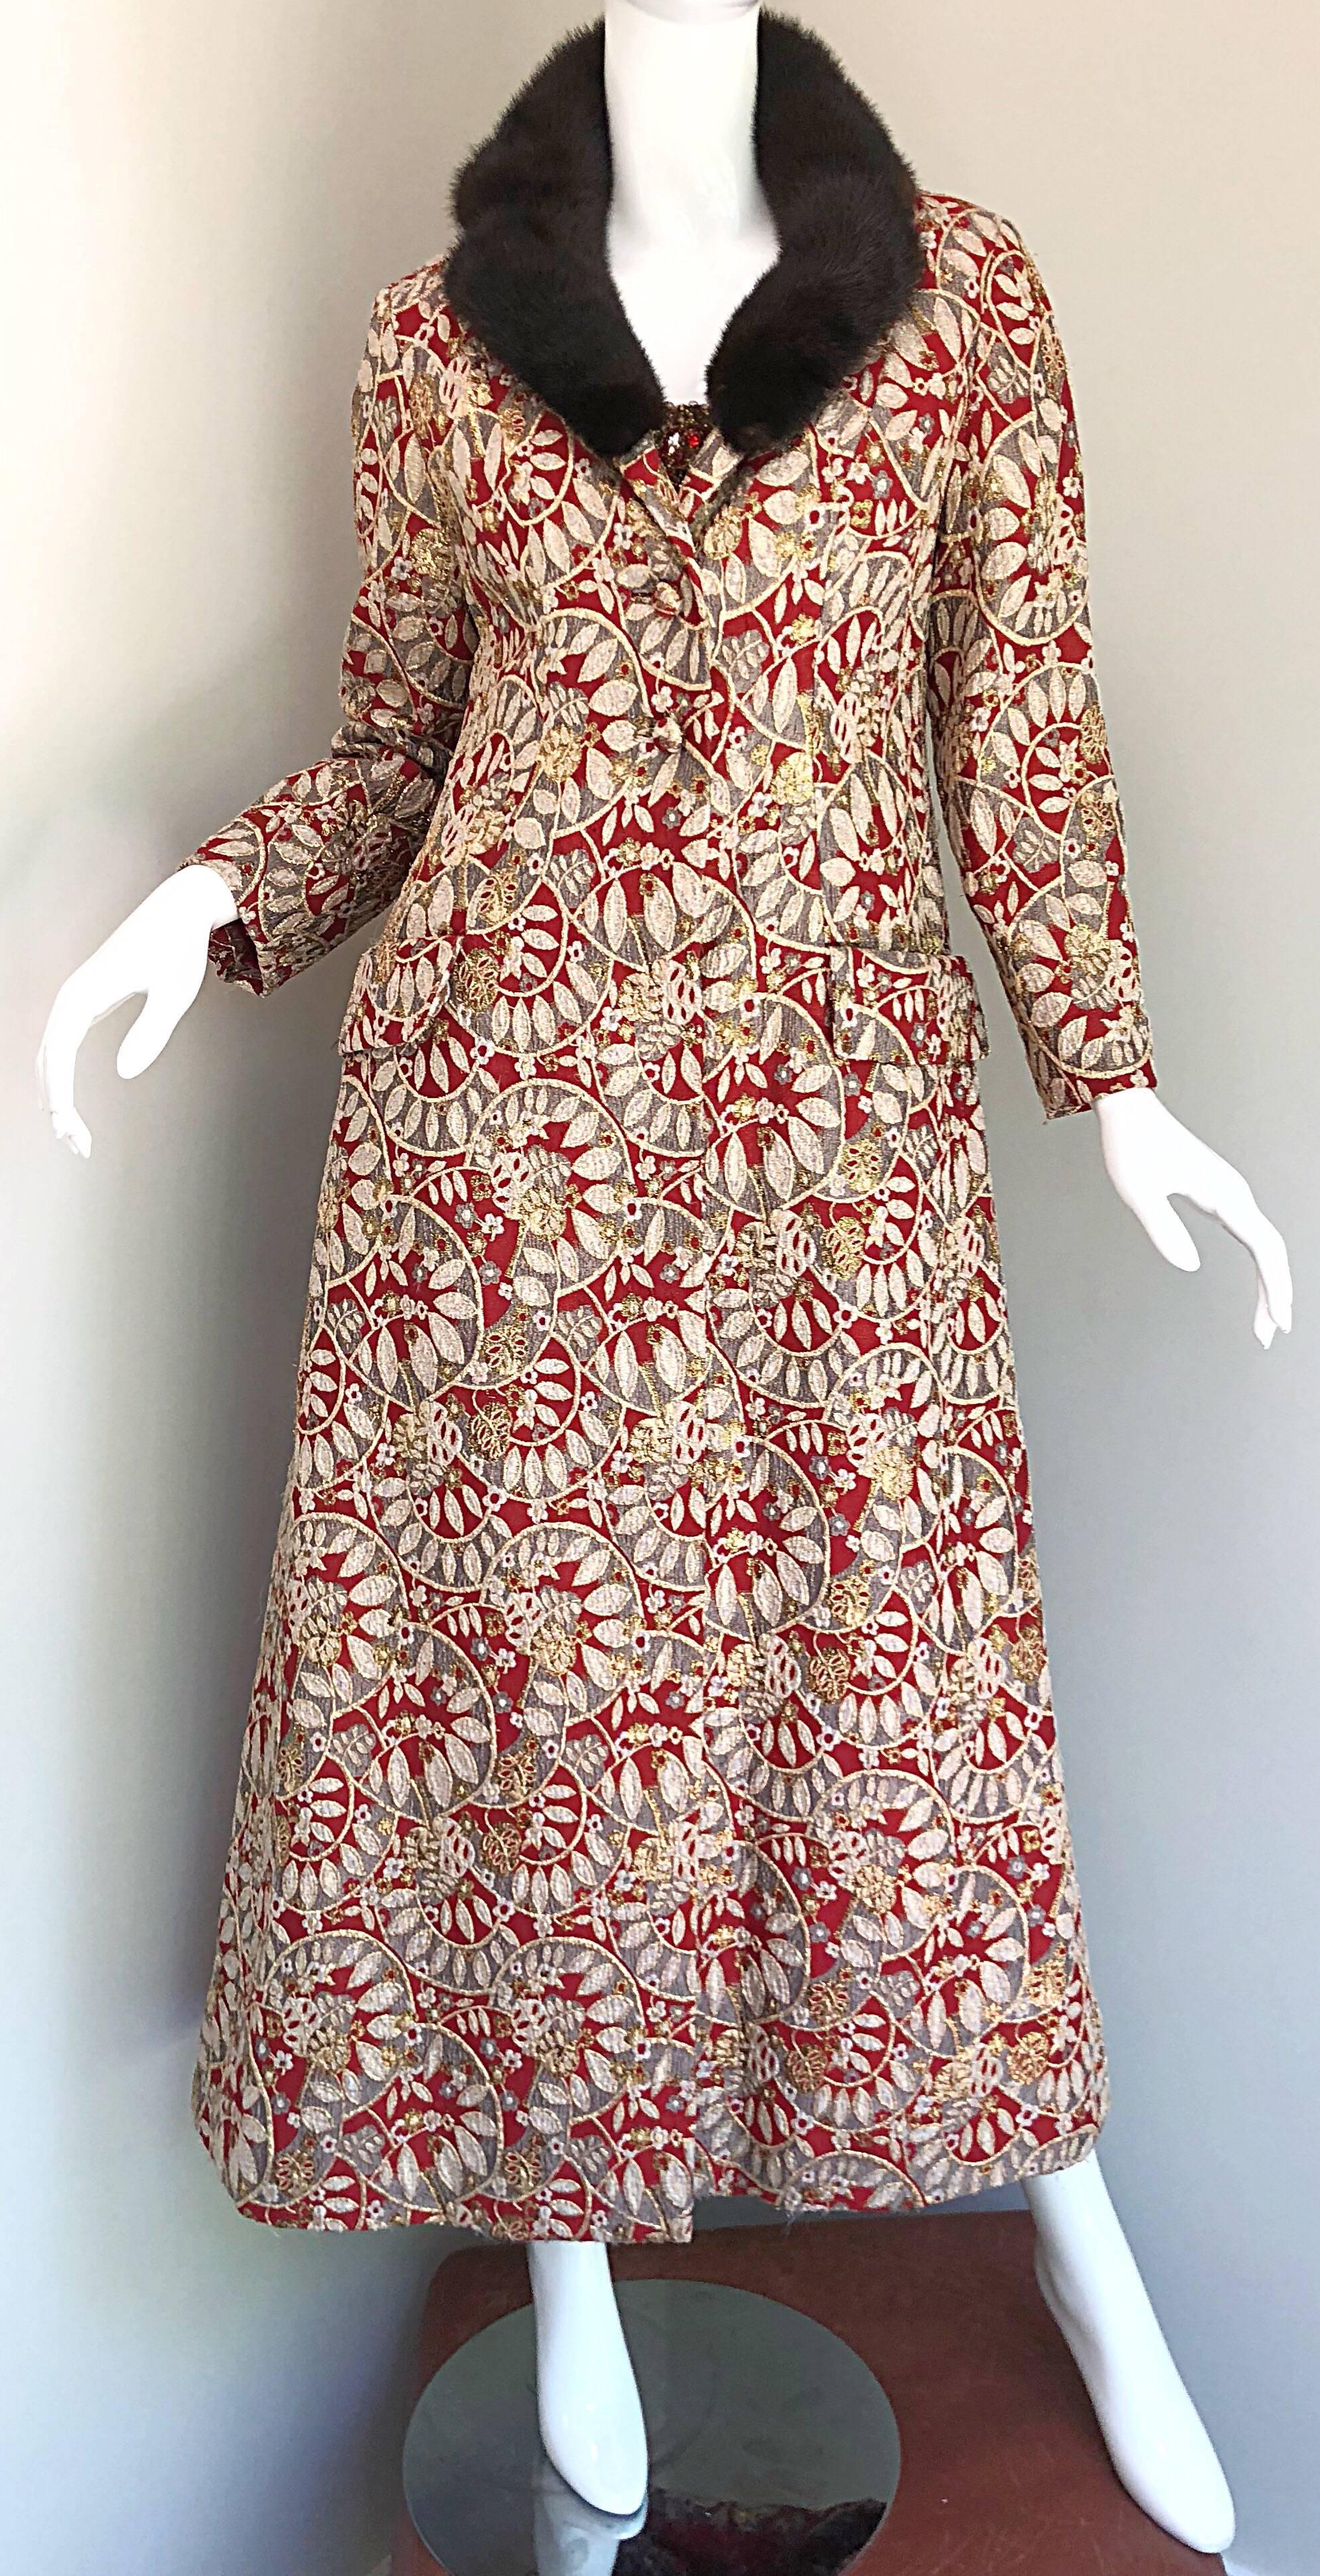 montaldo's vintage dress